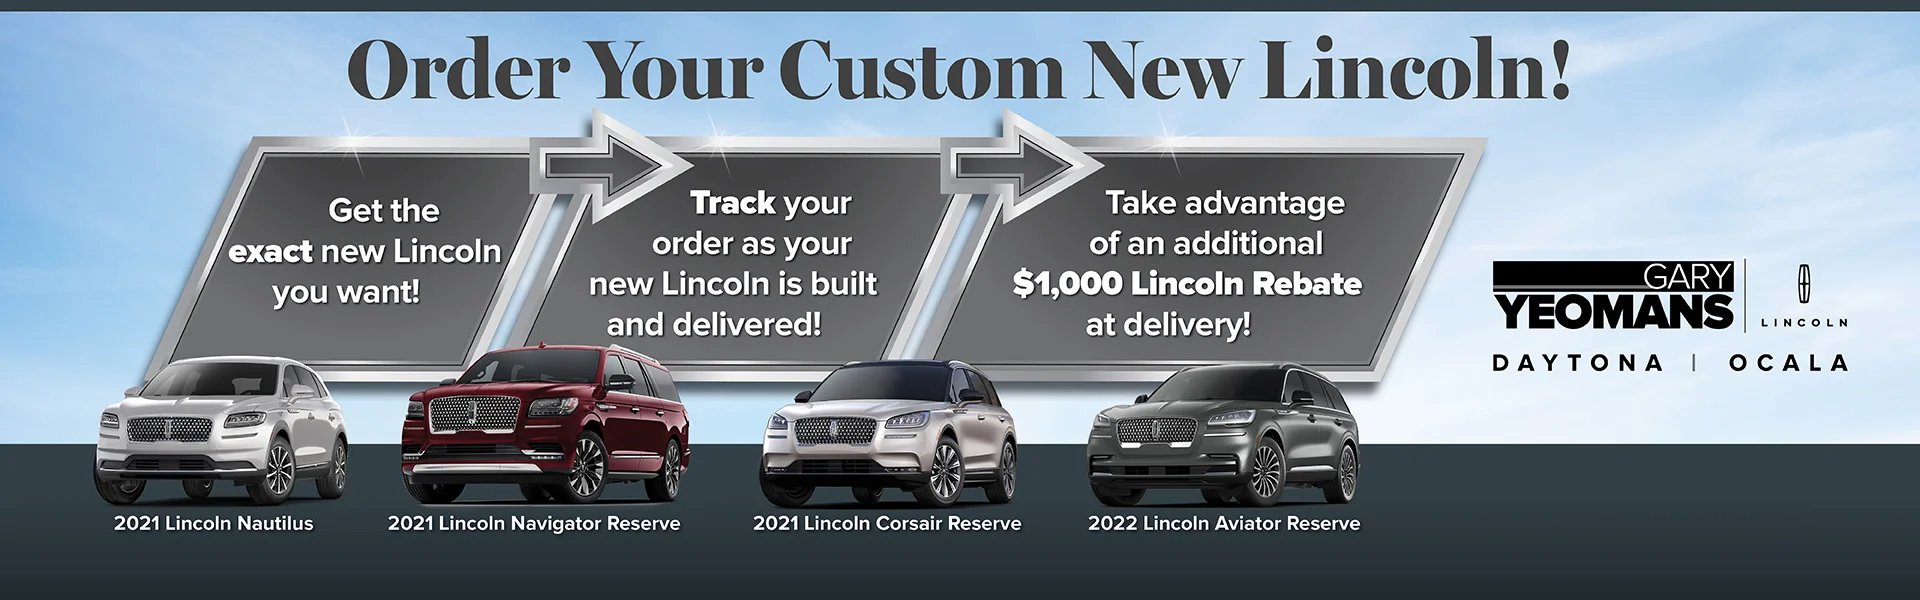 Order a custom new Lincoln